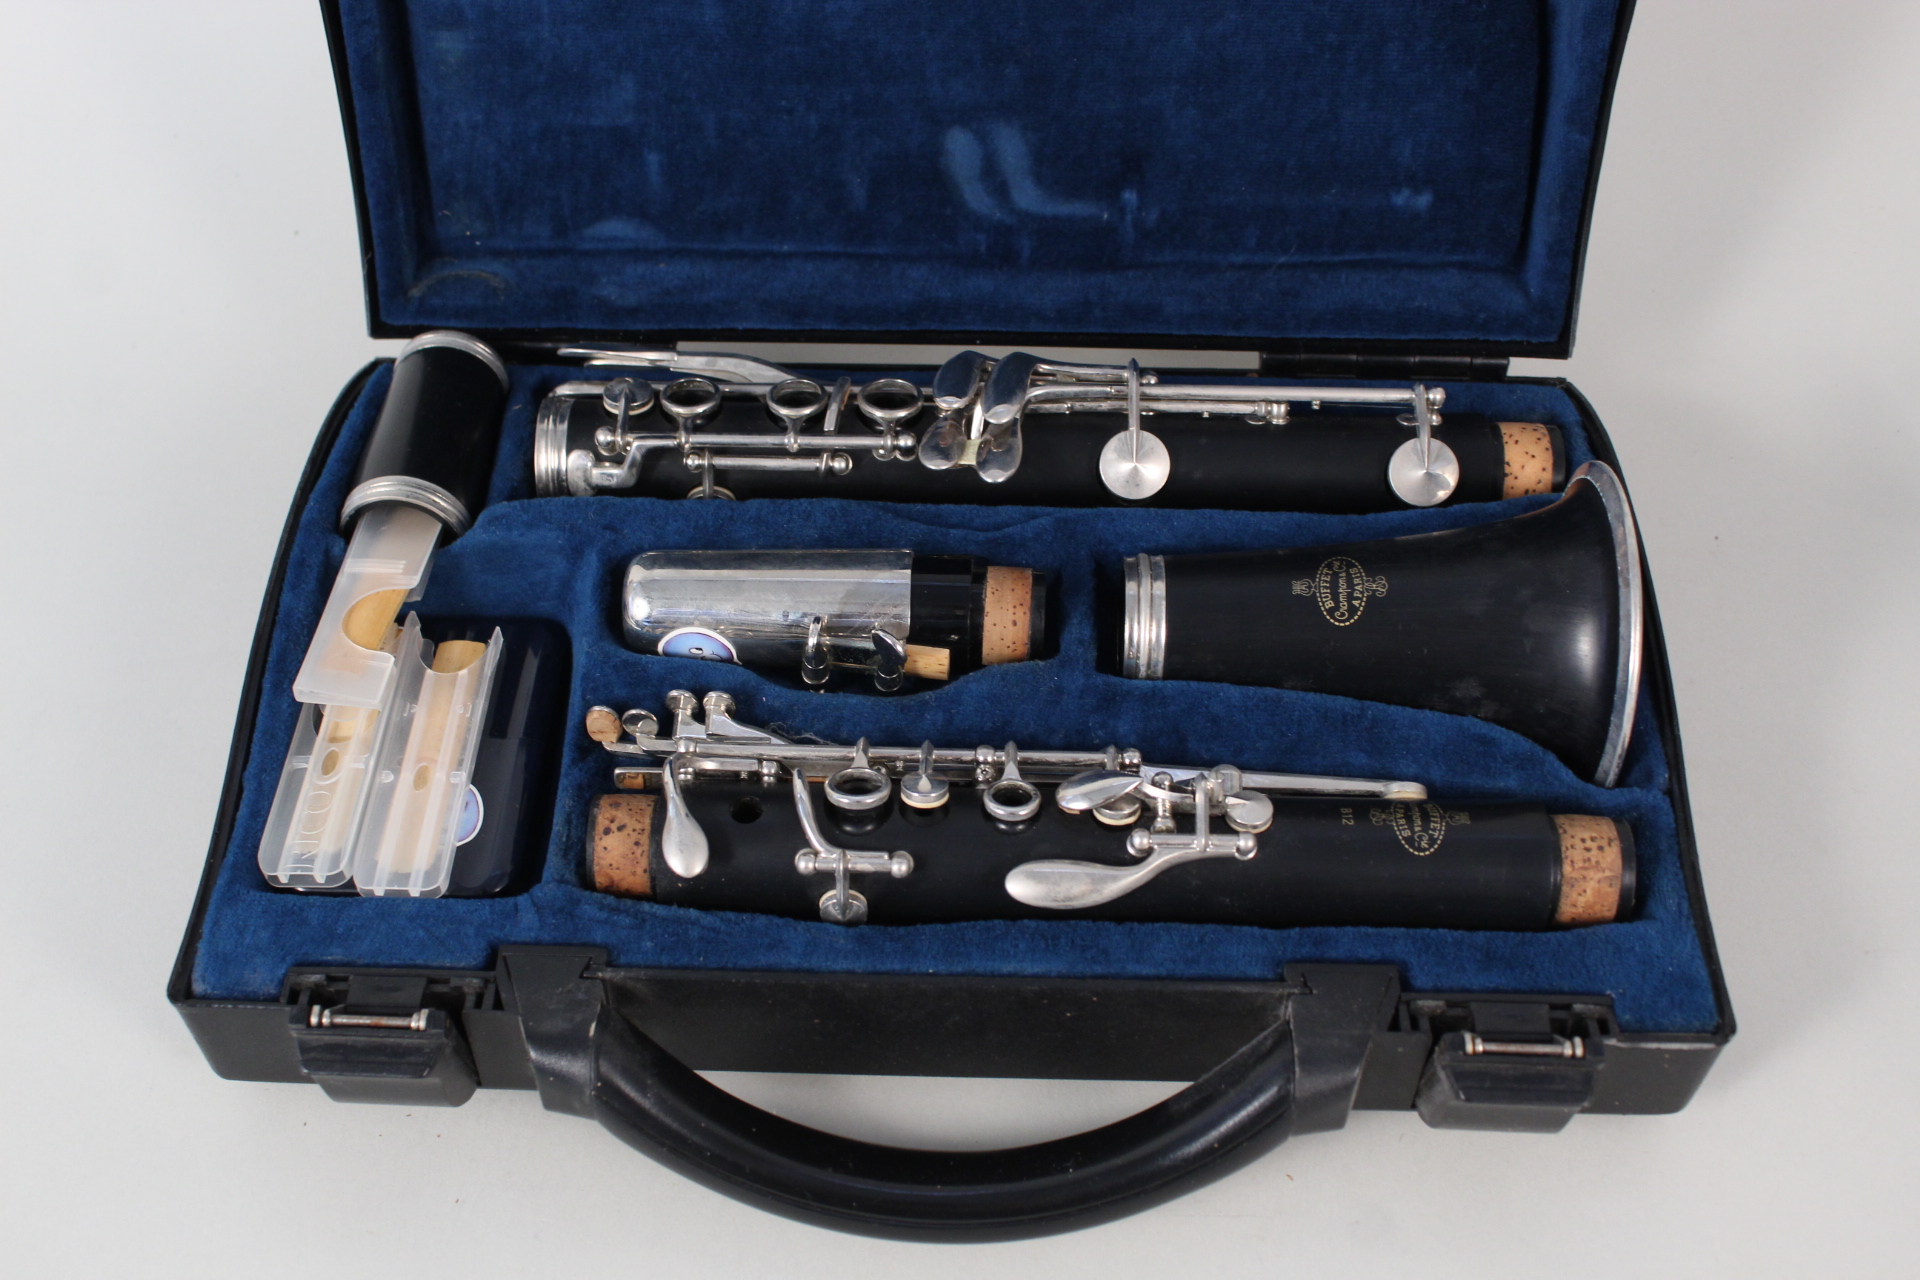 A cased Buffet Paris B12 clarinet